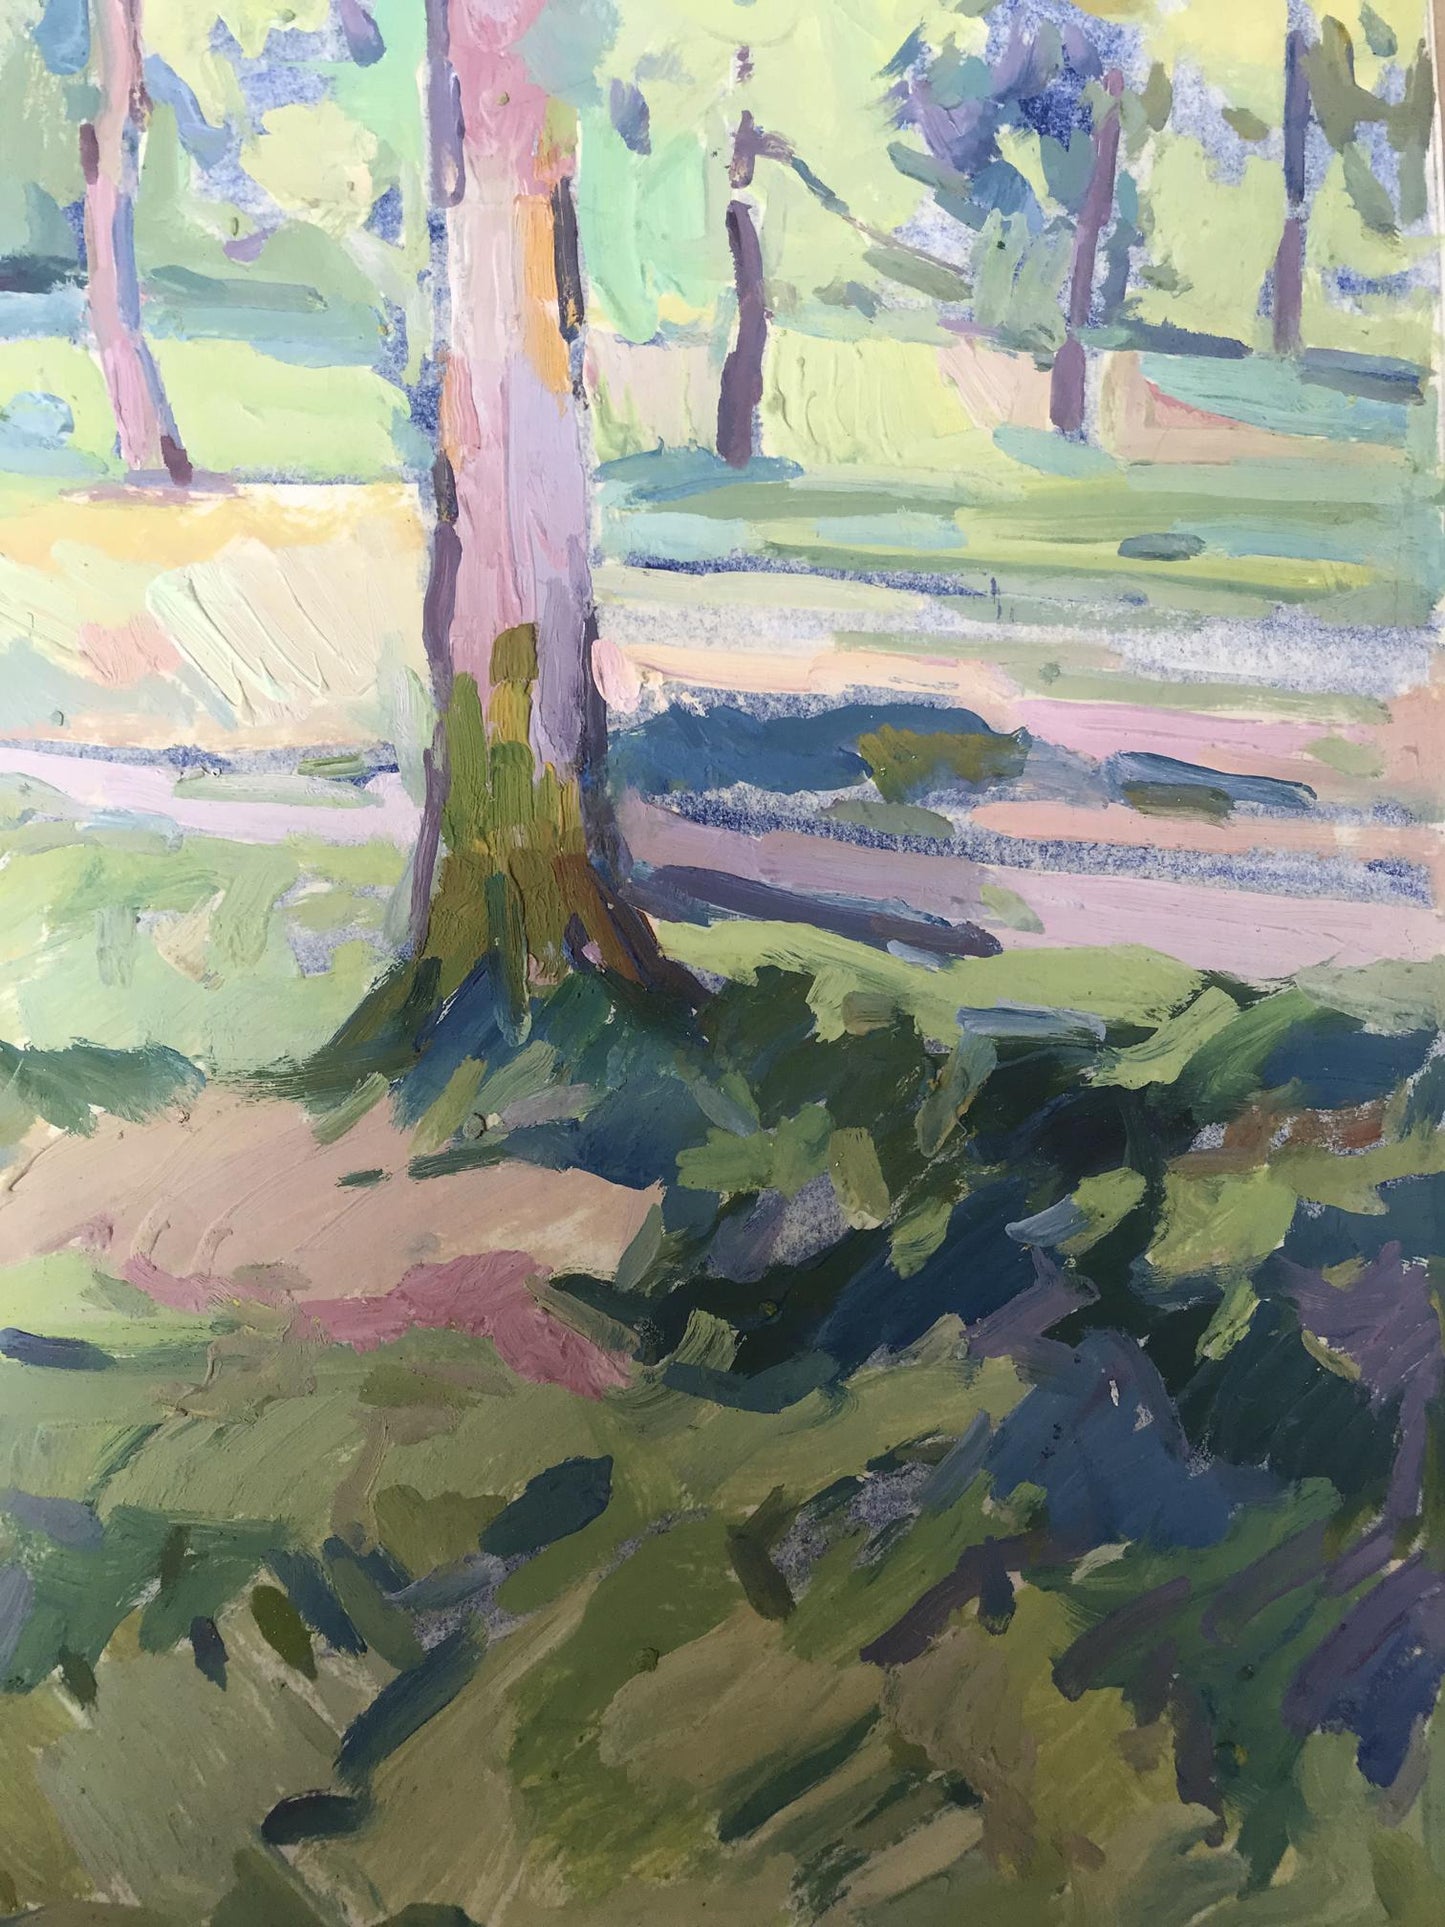 A forest park scene is illustrated in Peter Dobrev's oil artwork